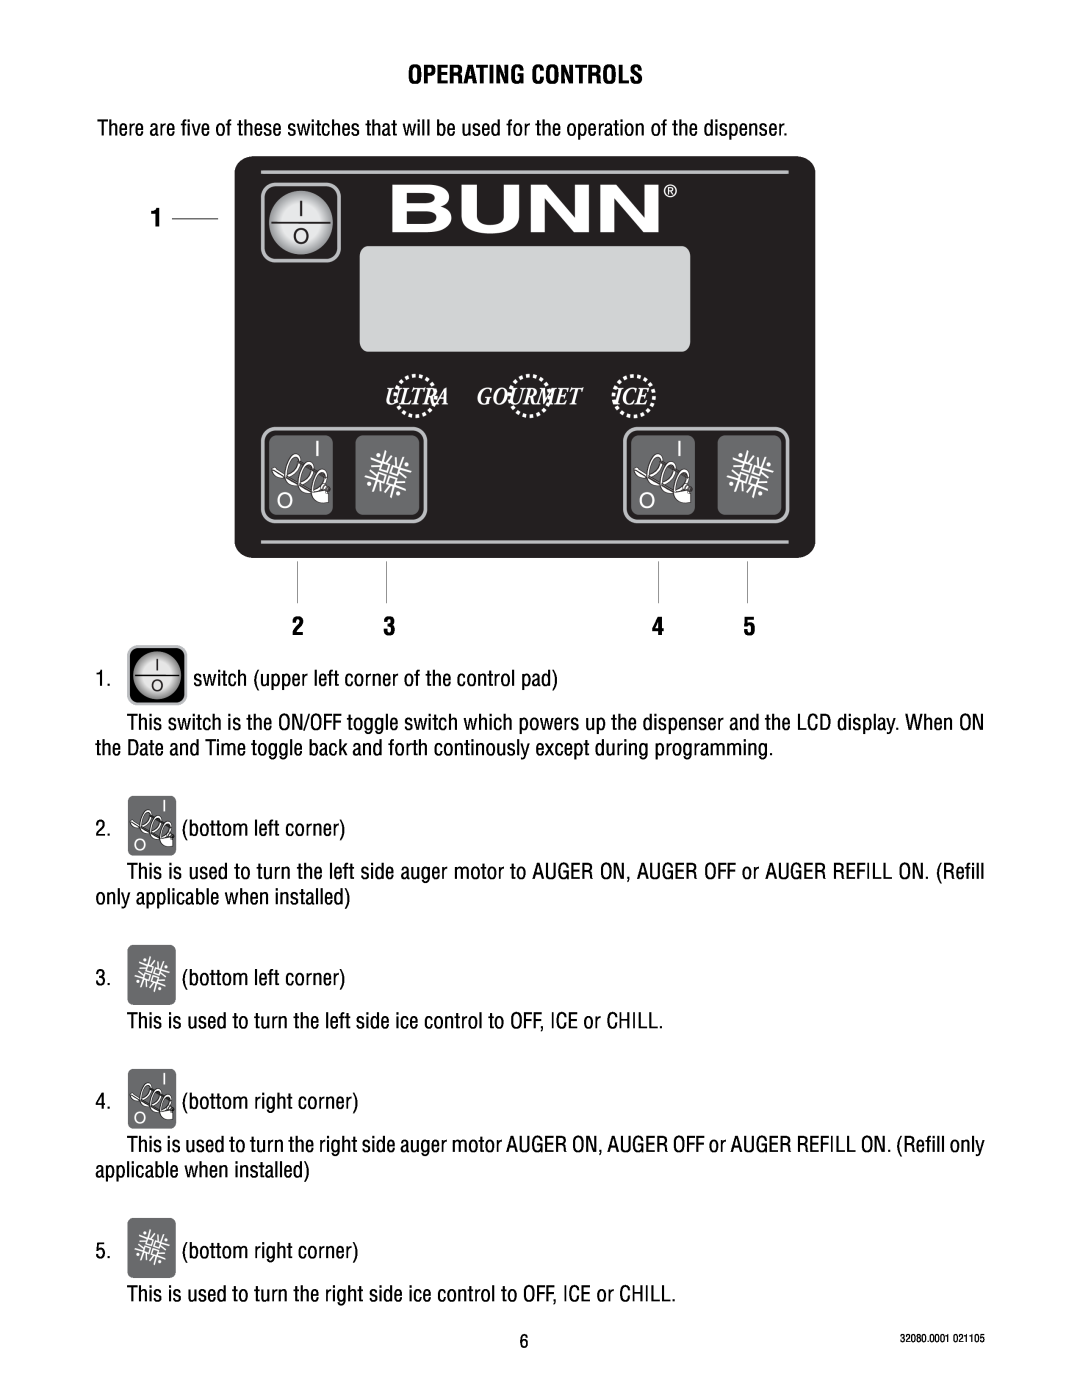 Bunn 2 manual Operating Controls 